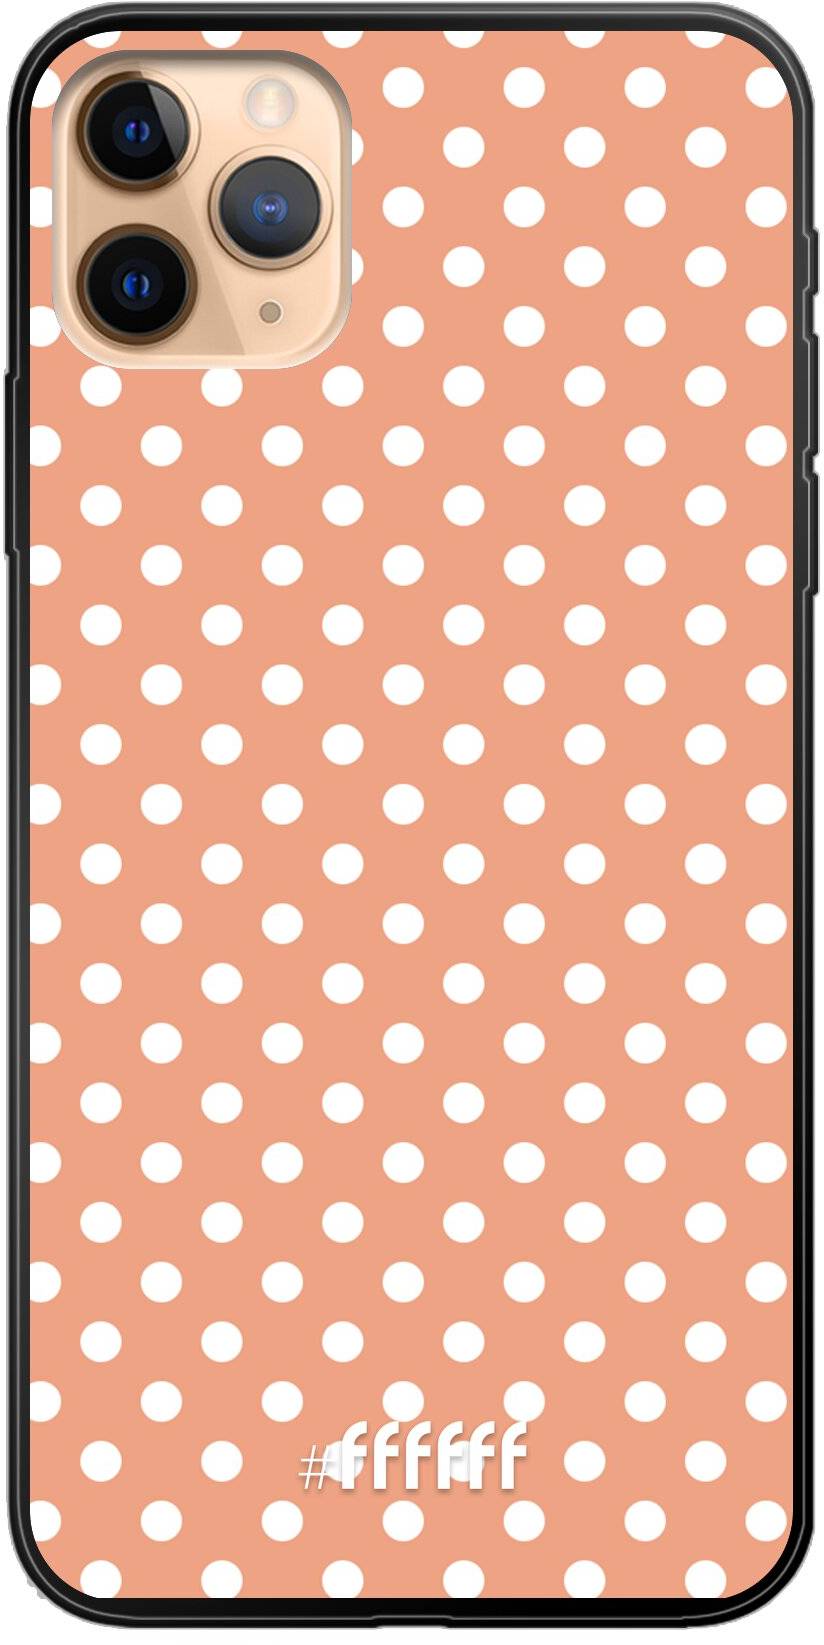 Peachy Dots iPhone 11 Pro Max